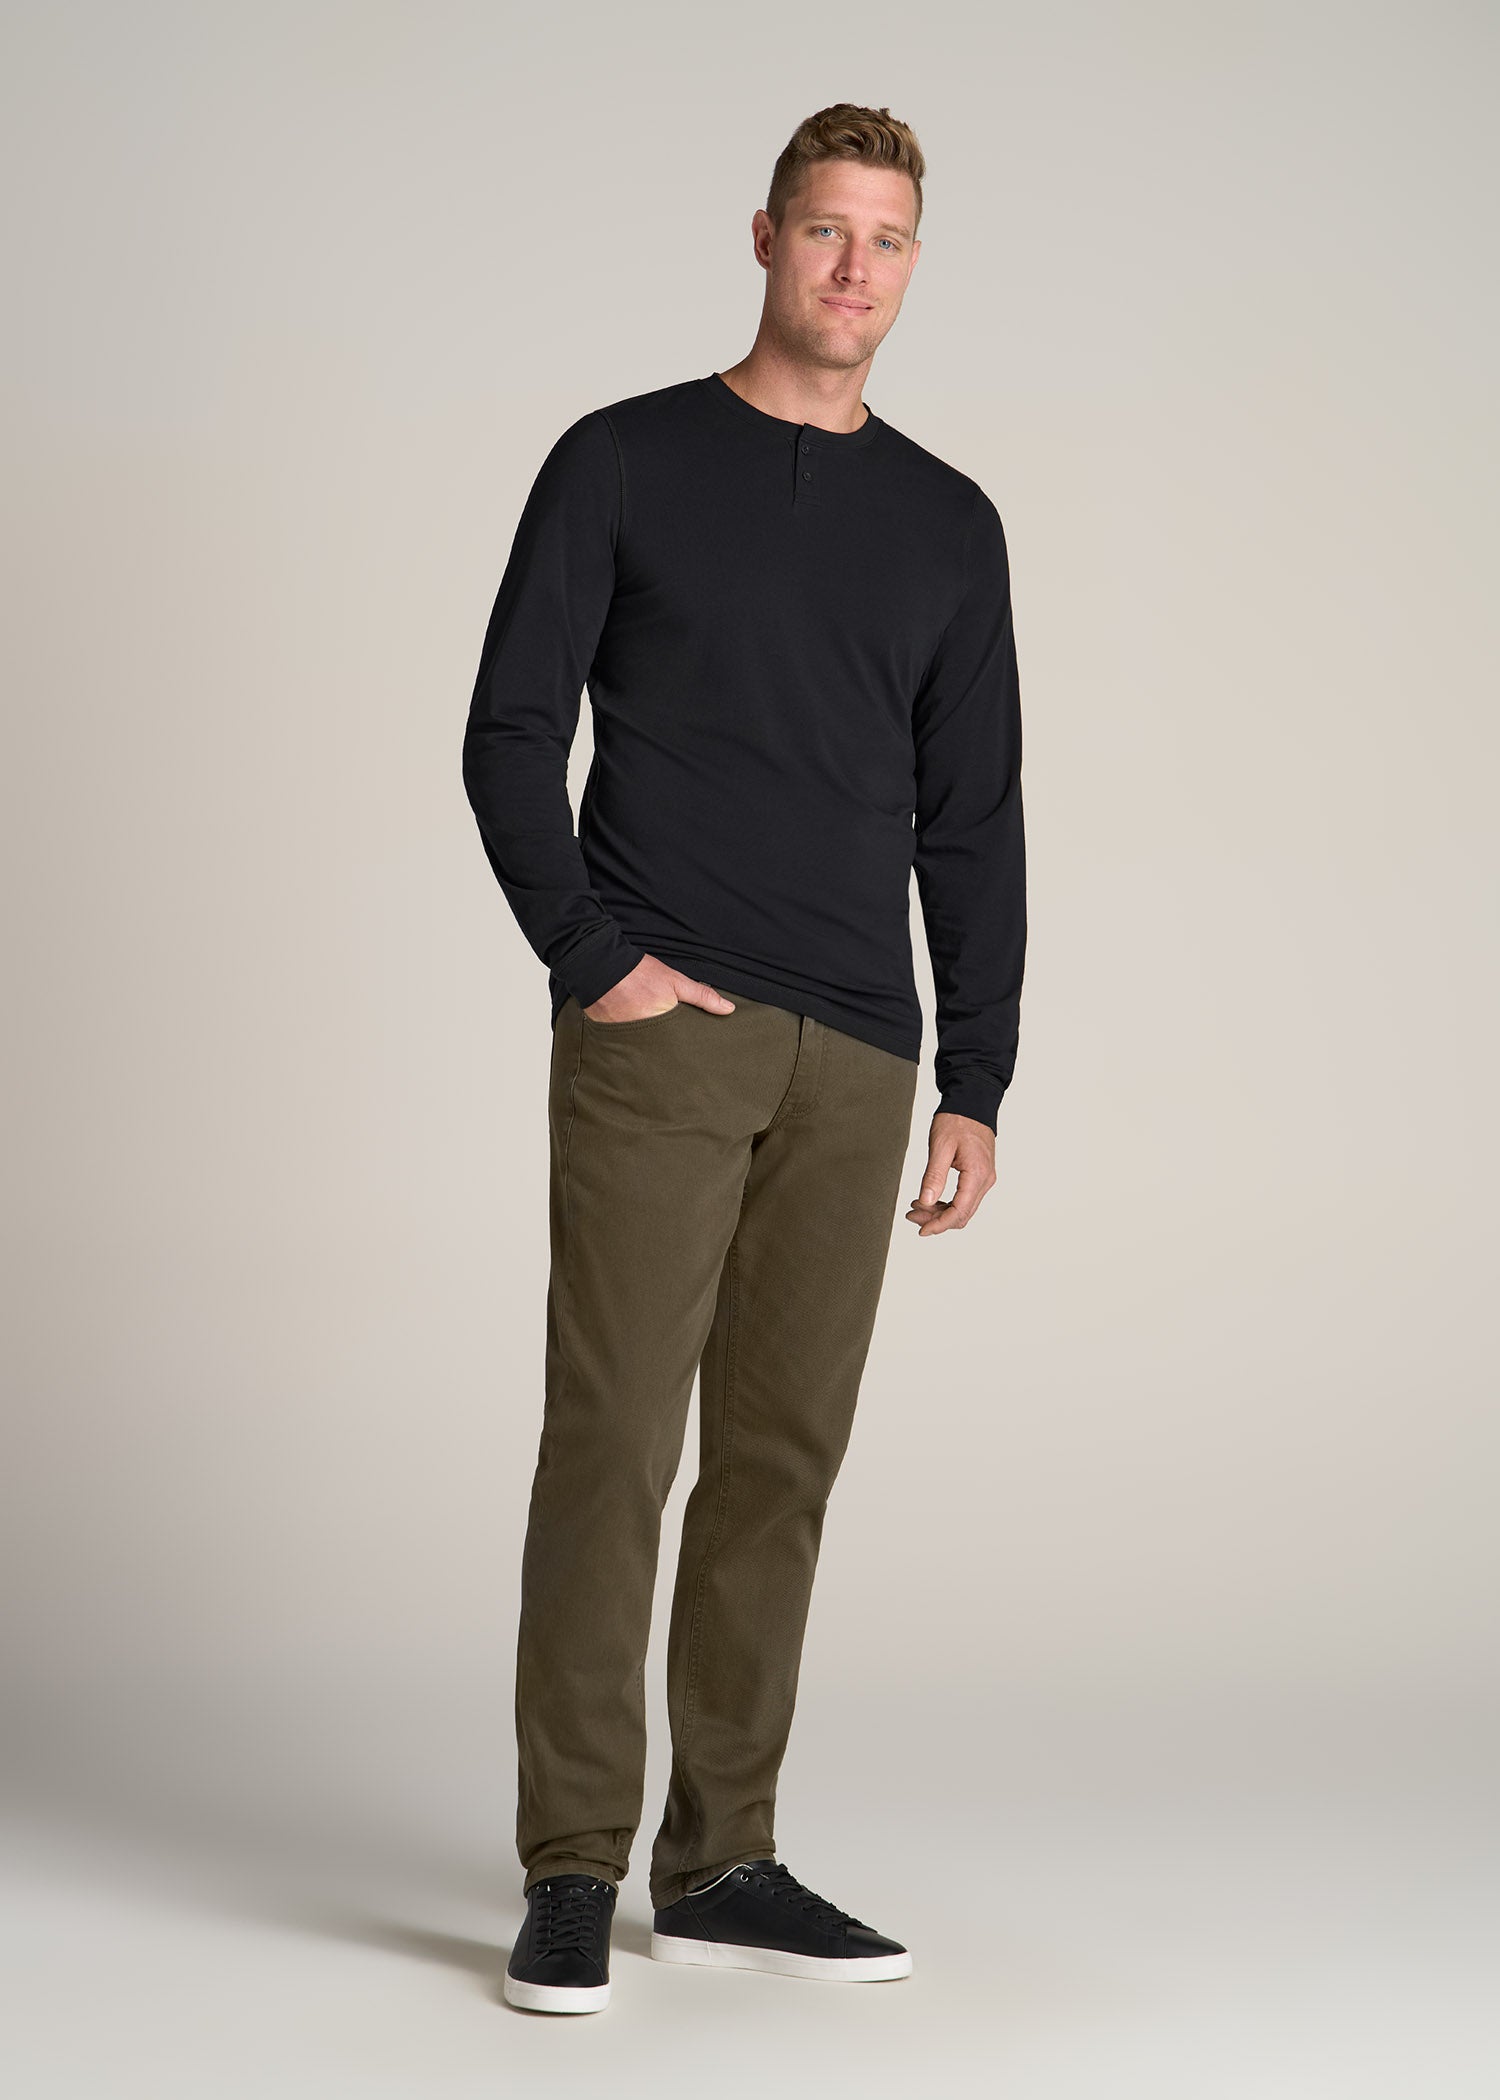 Pima Stretch Knit Henley Shirt for Tall Men